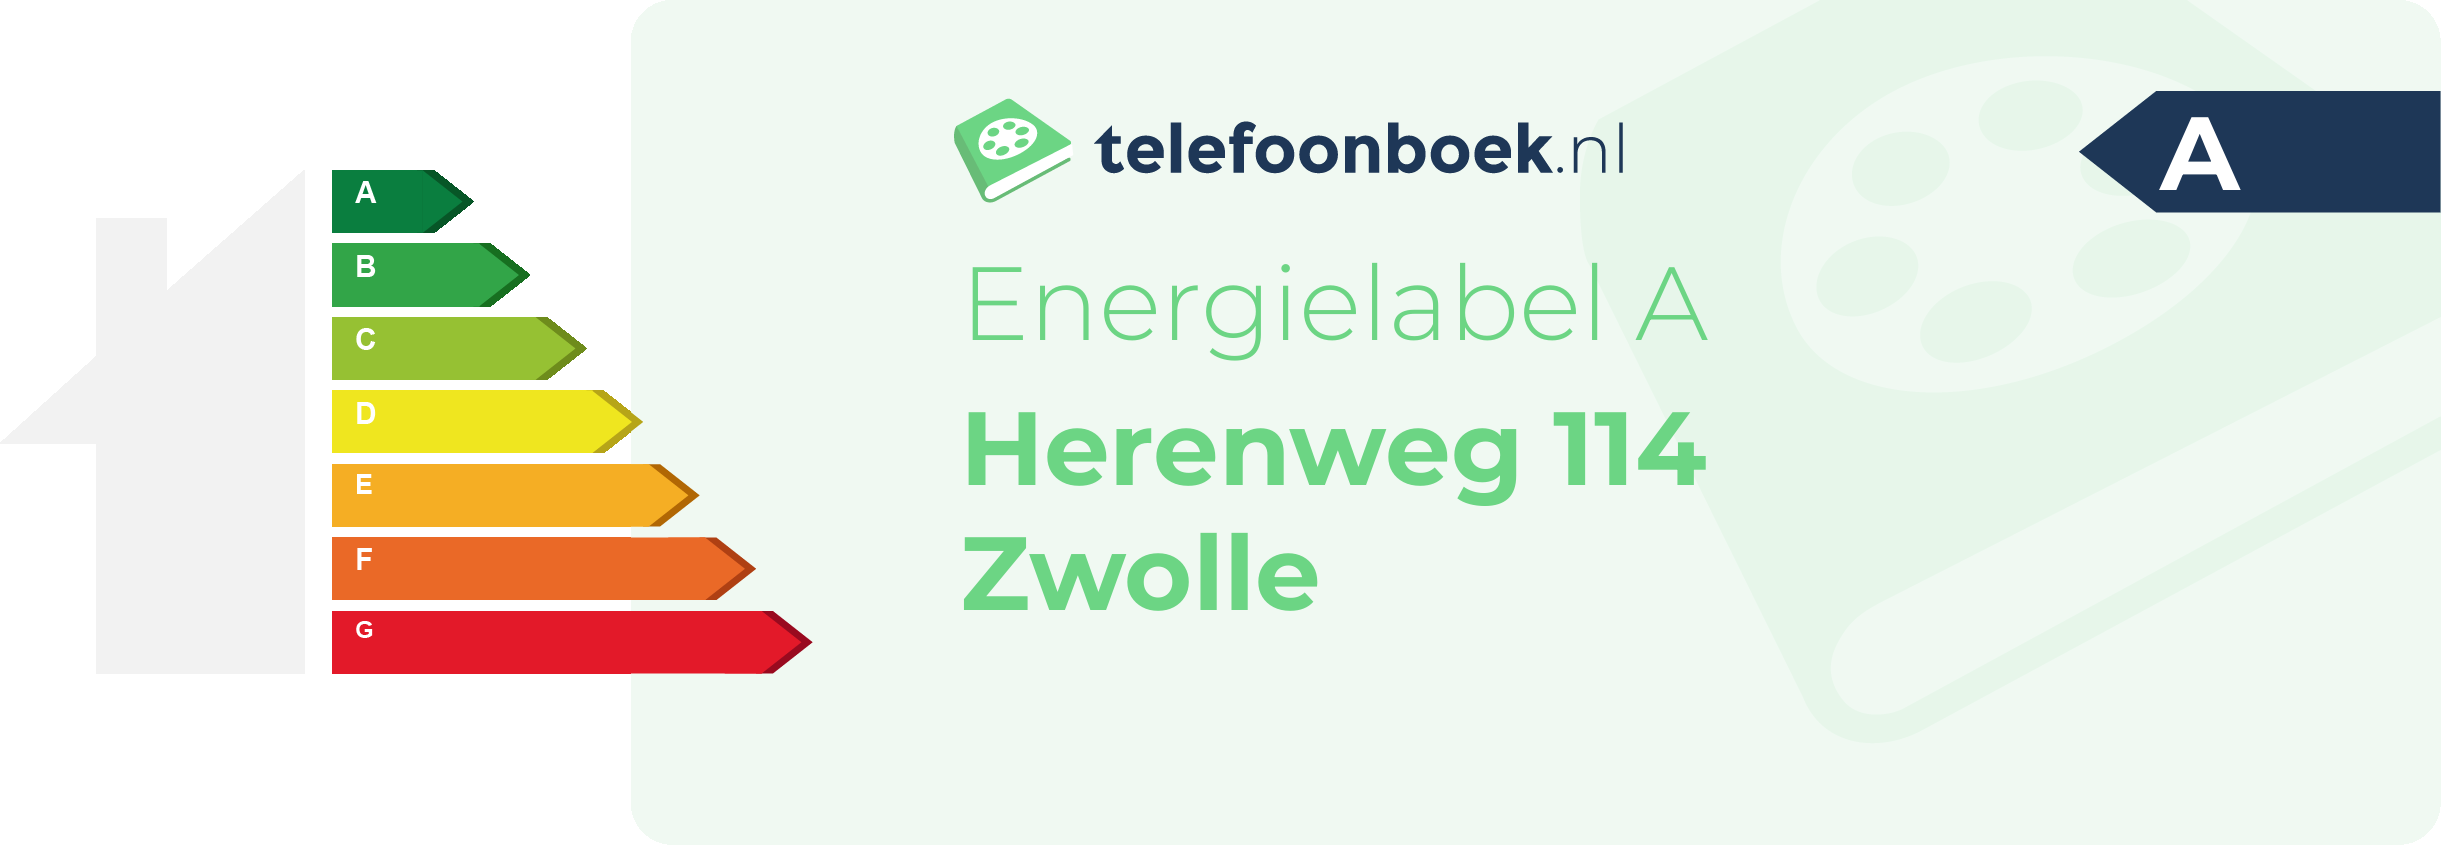 Energielabel Herenweg 114 Zwolle